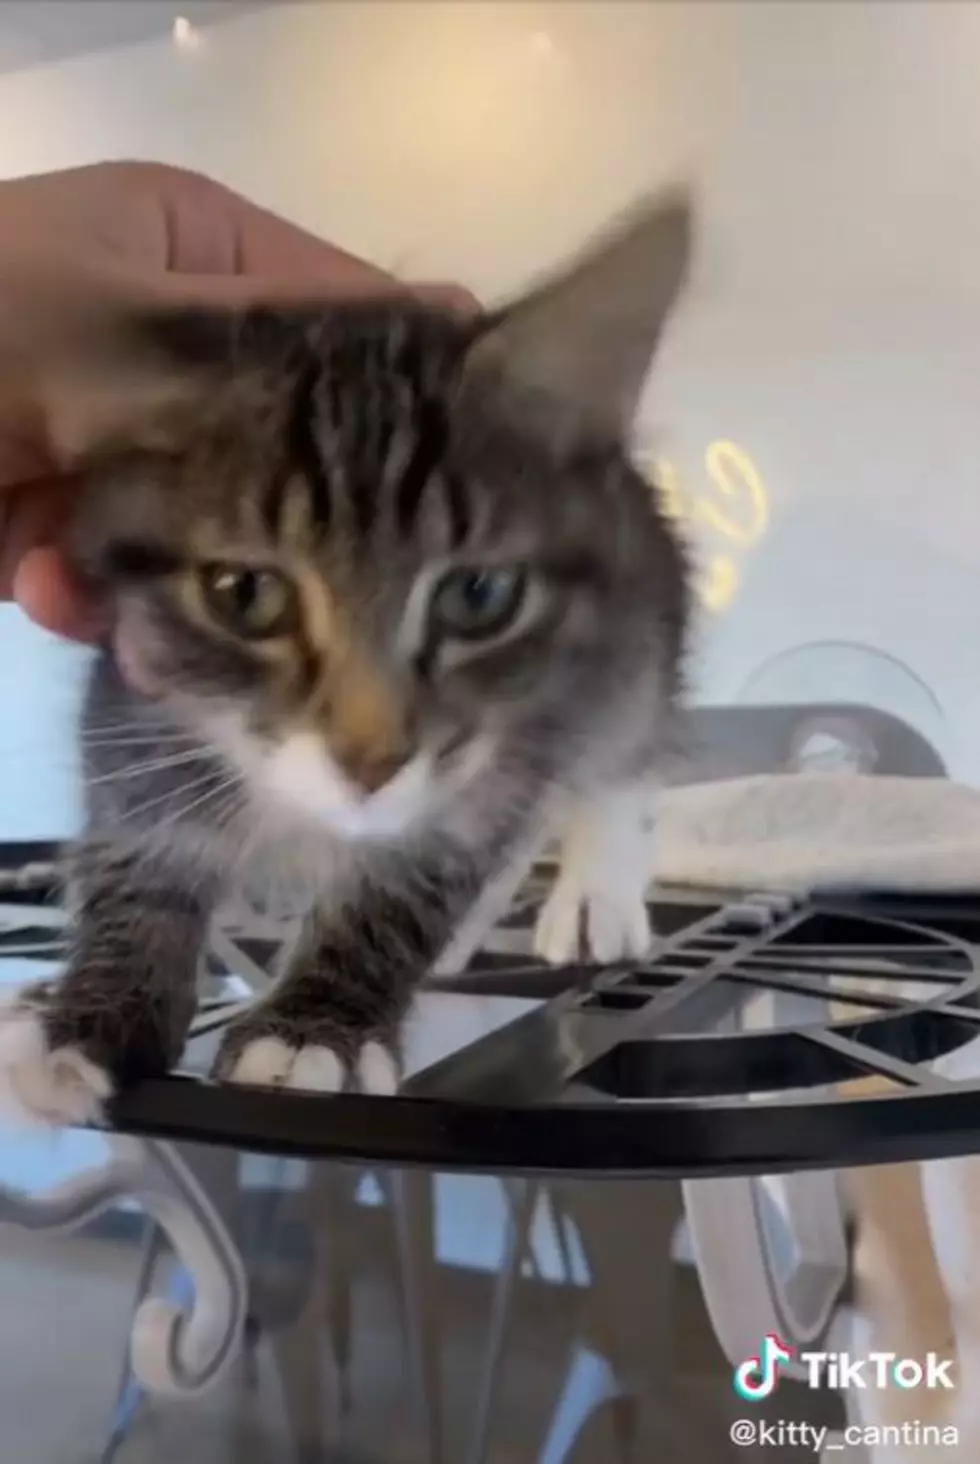 How to Adopt One of Spokane's Tik Tok Famous Cats